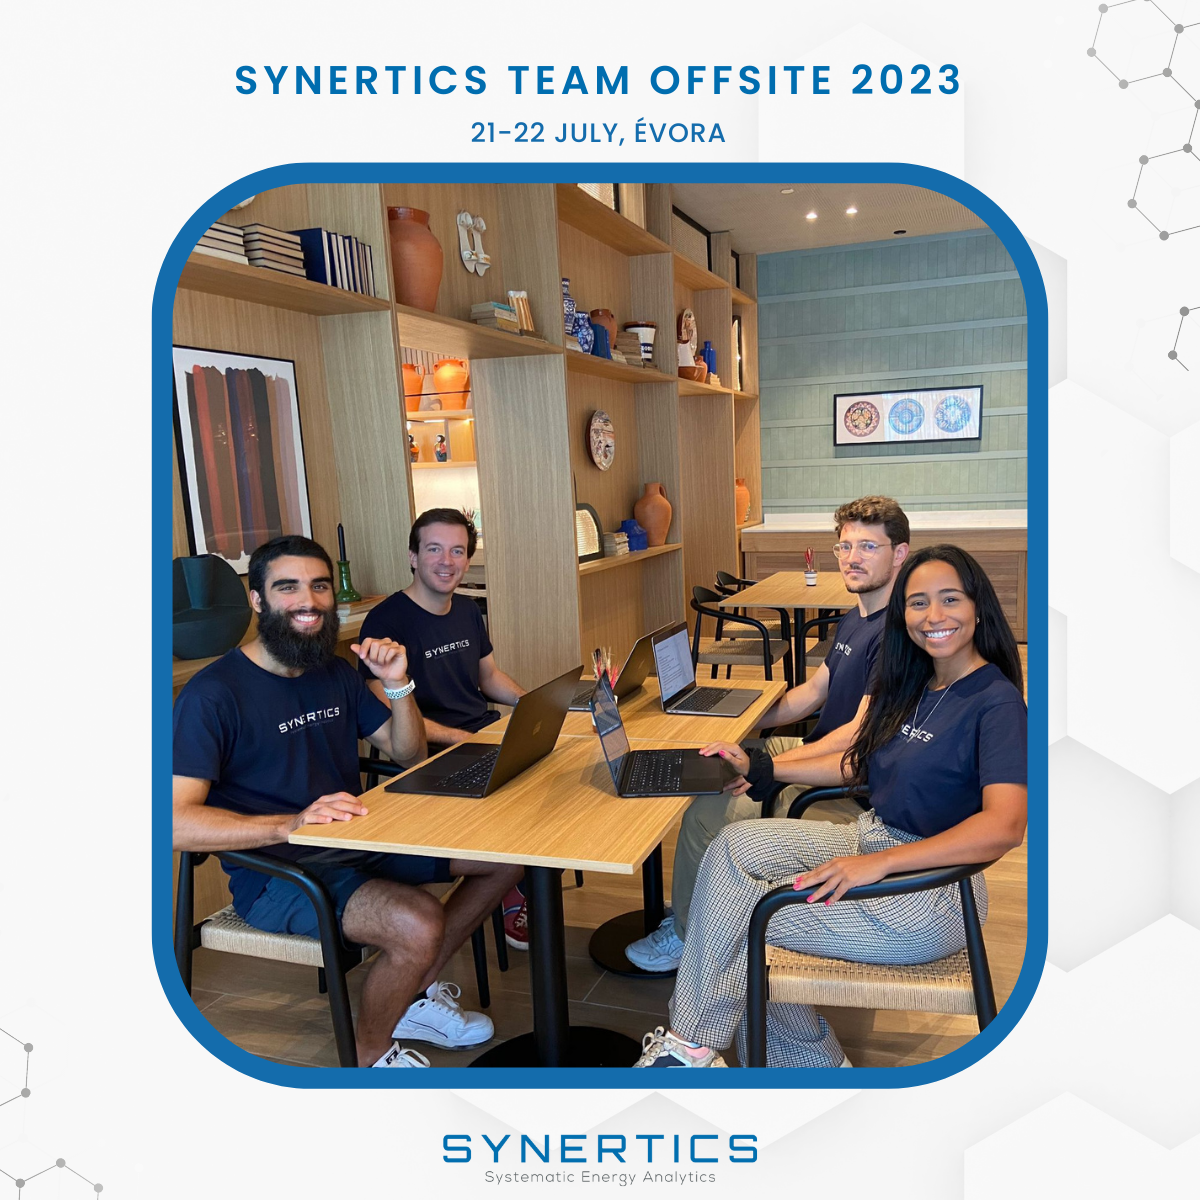 Synertics Team Offsite in Évora 2023